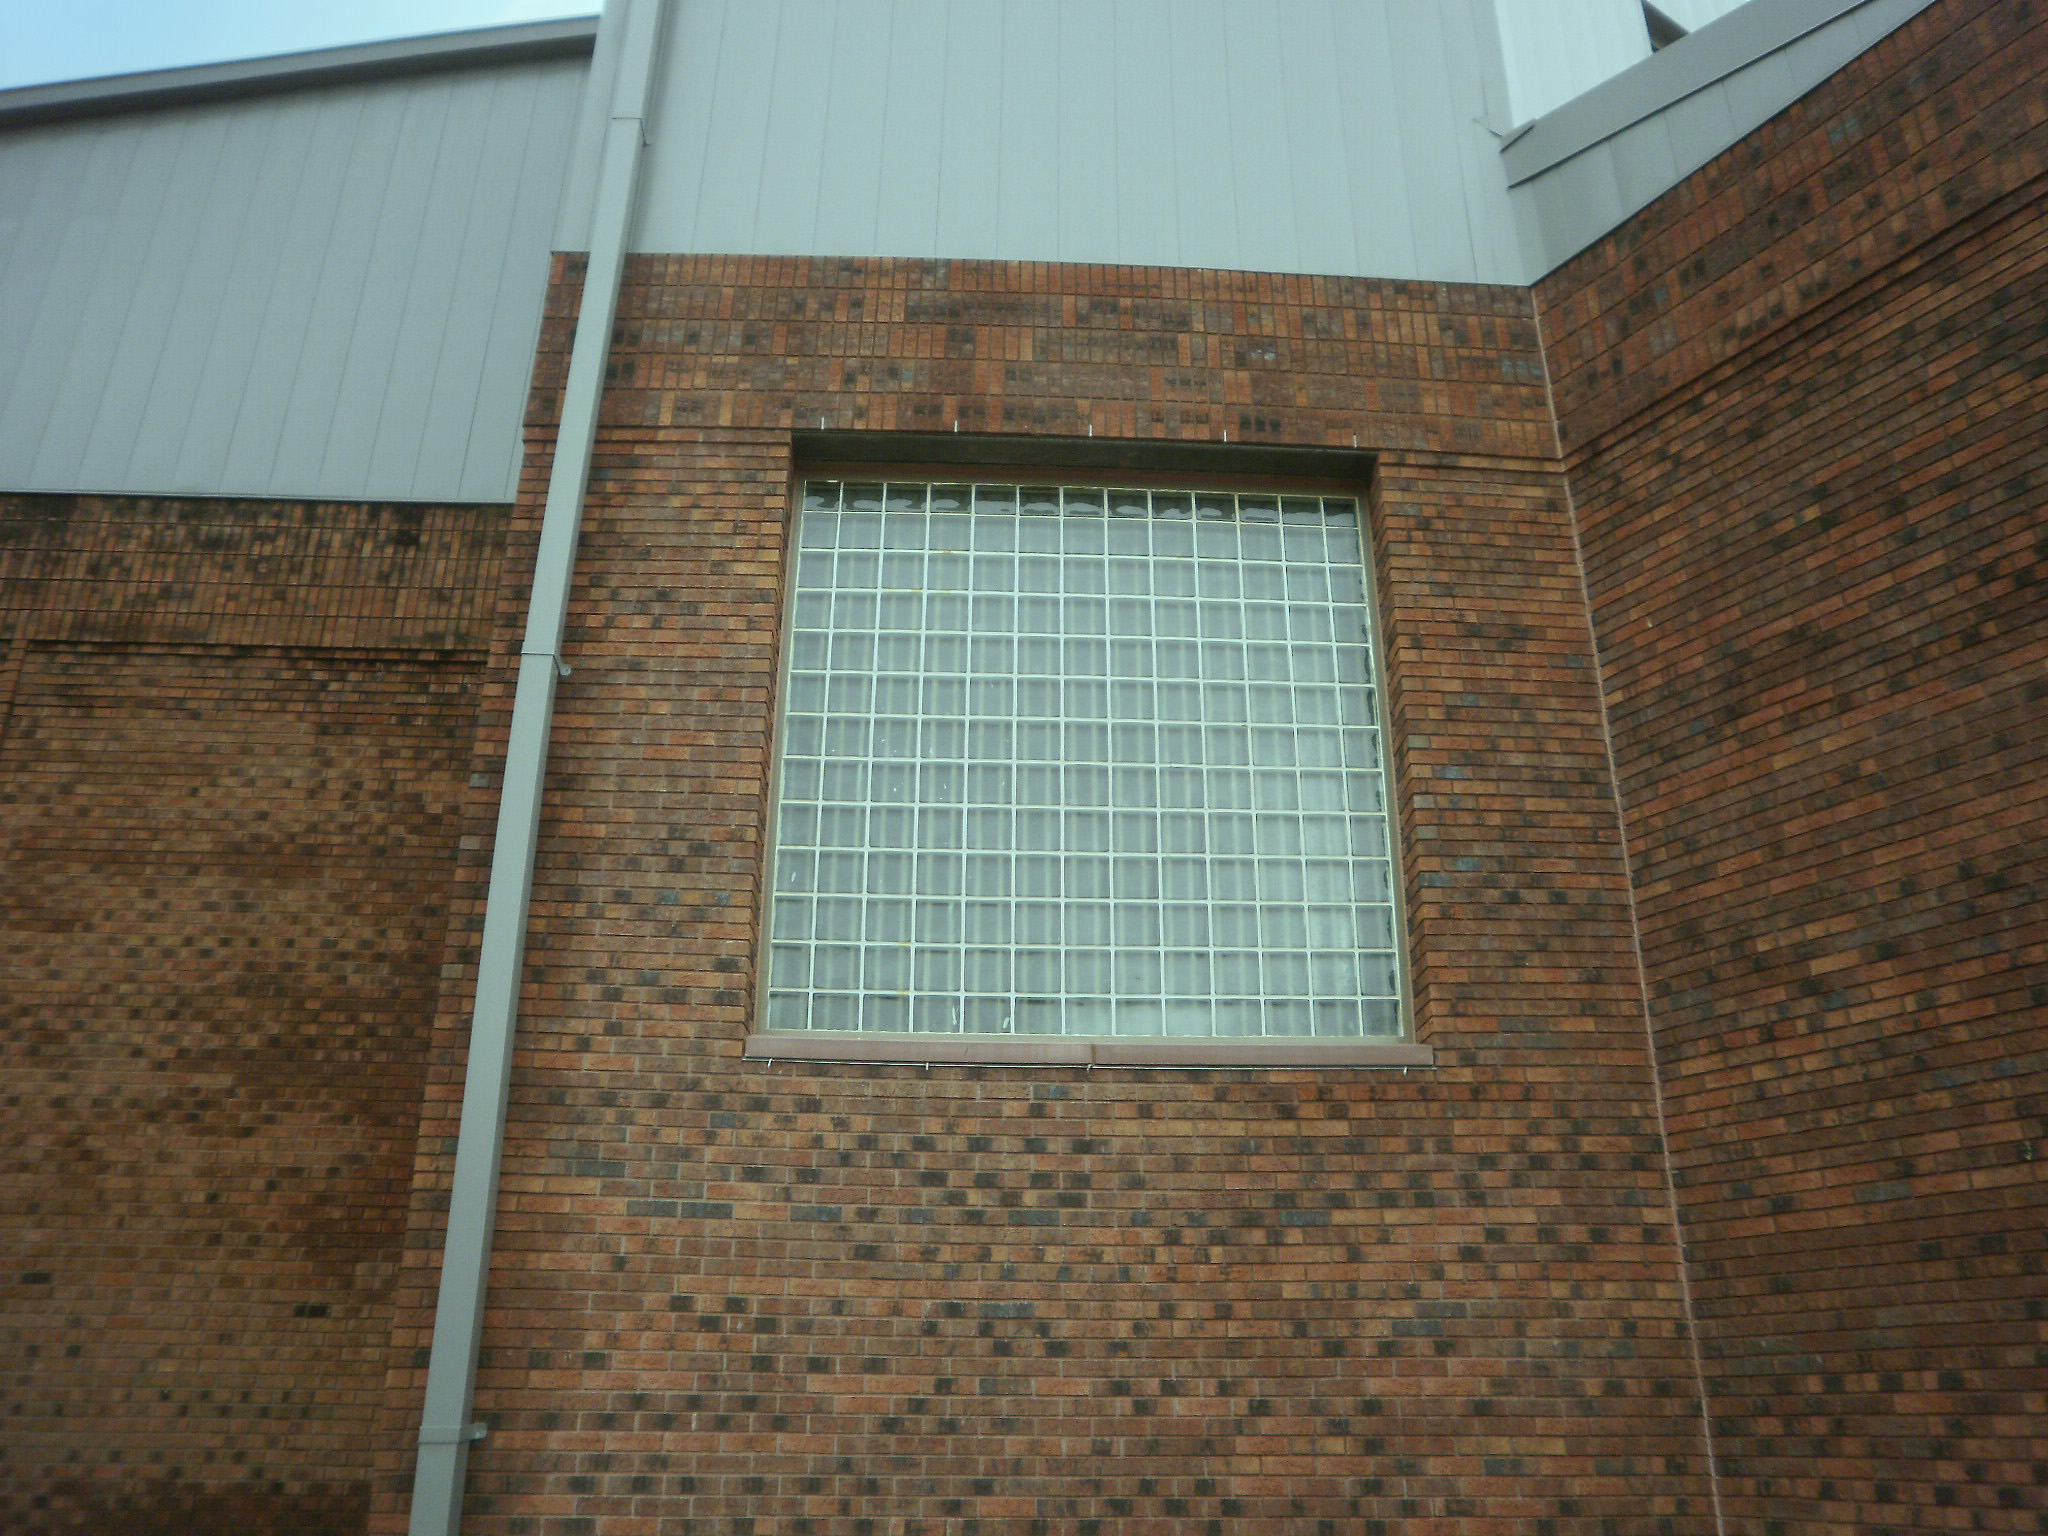 correction center security glass block windows